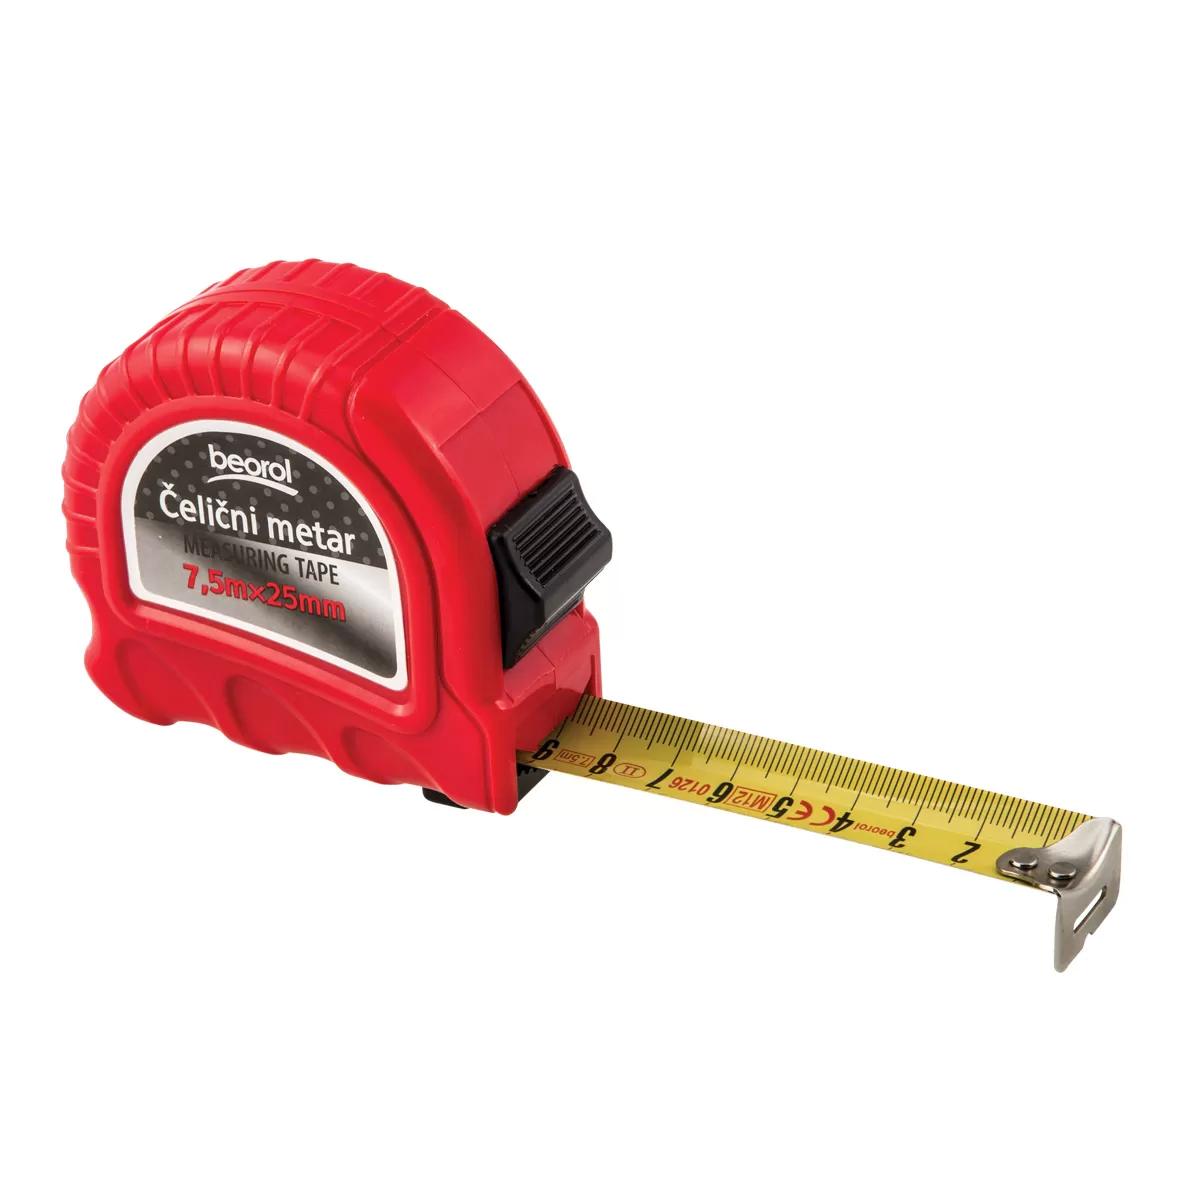 Steel measuring tape 7.5m 